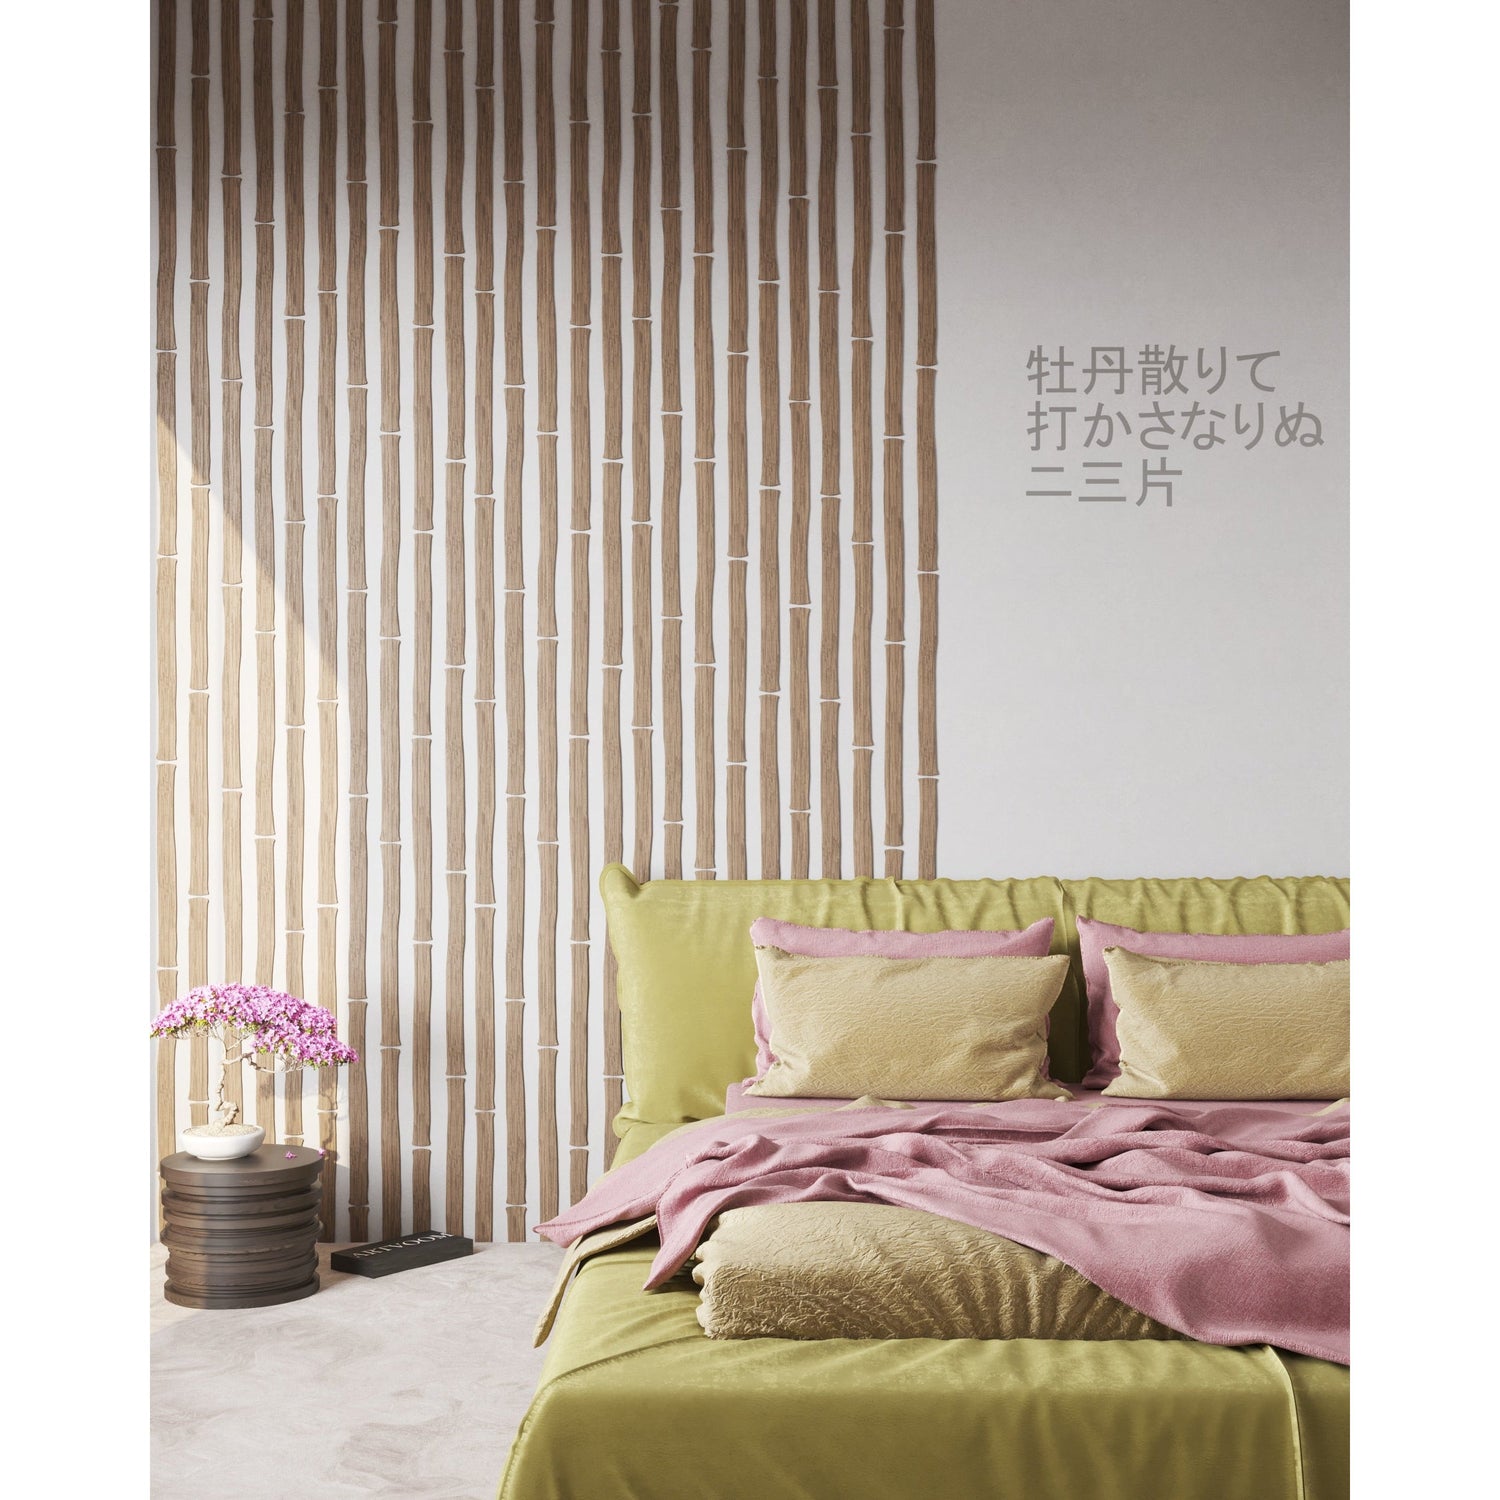 Rosewood Bamboo Panel Wall Slats, 24 pcs in box. Artvoom Wall Decor - Artvoom